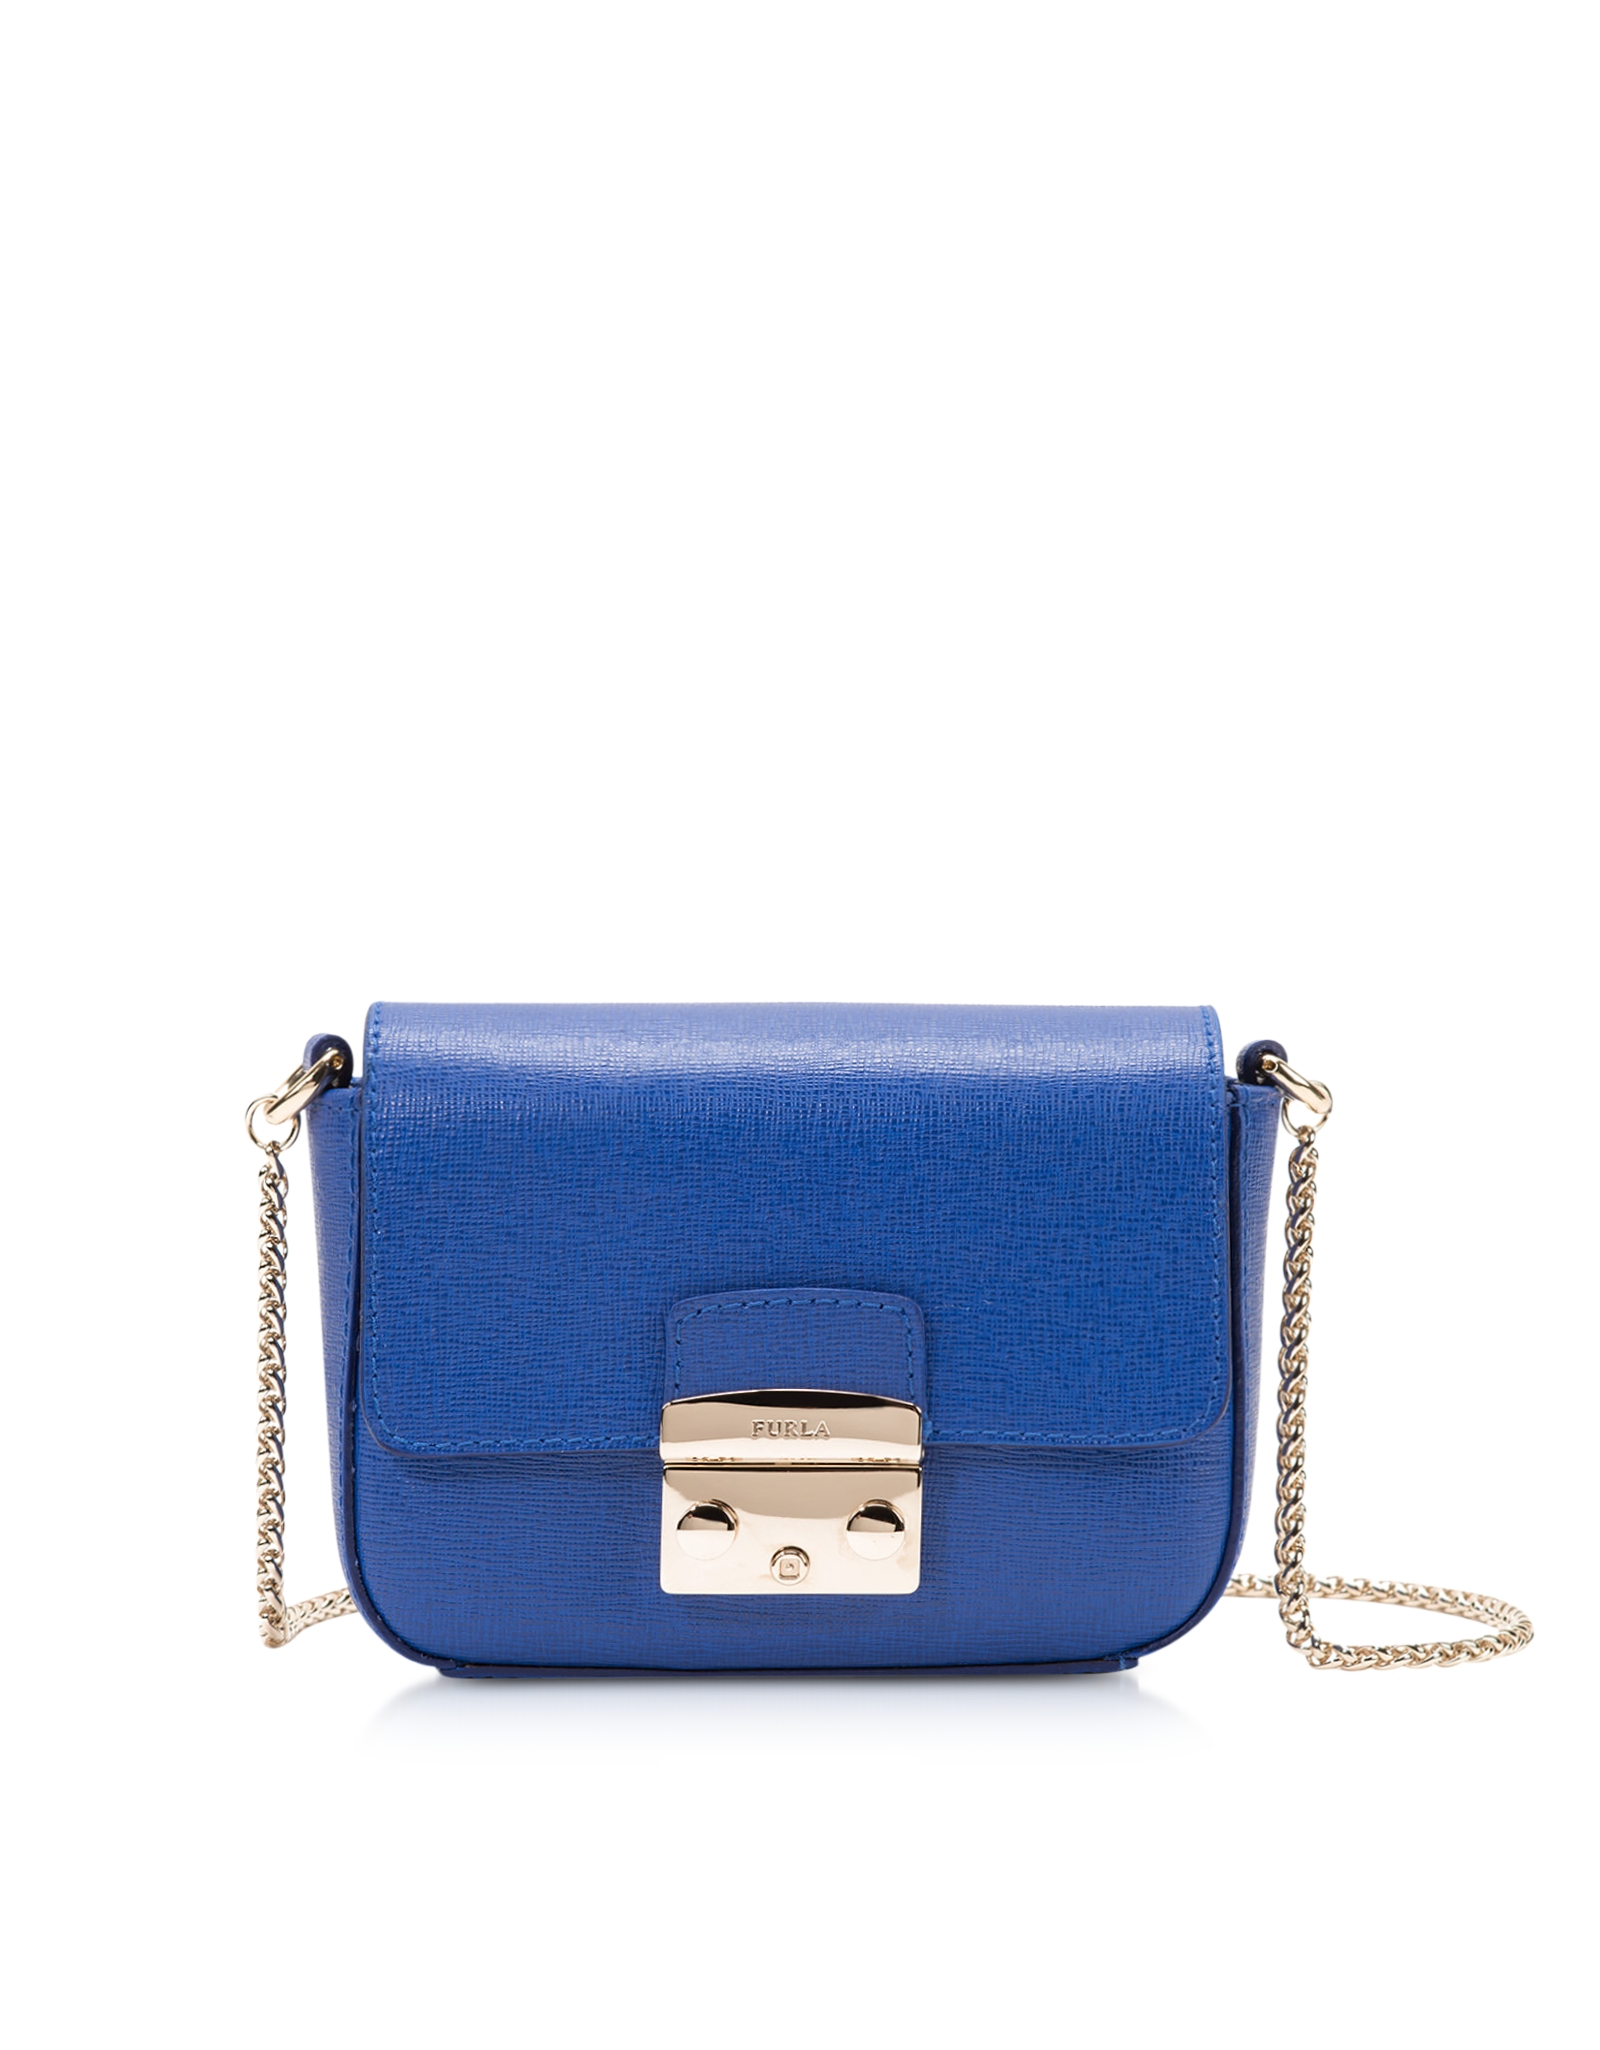 Furla Metropolis Saffiano Leather Mini Crossbody Bag W/Chain in Blue | Lyst